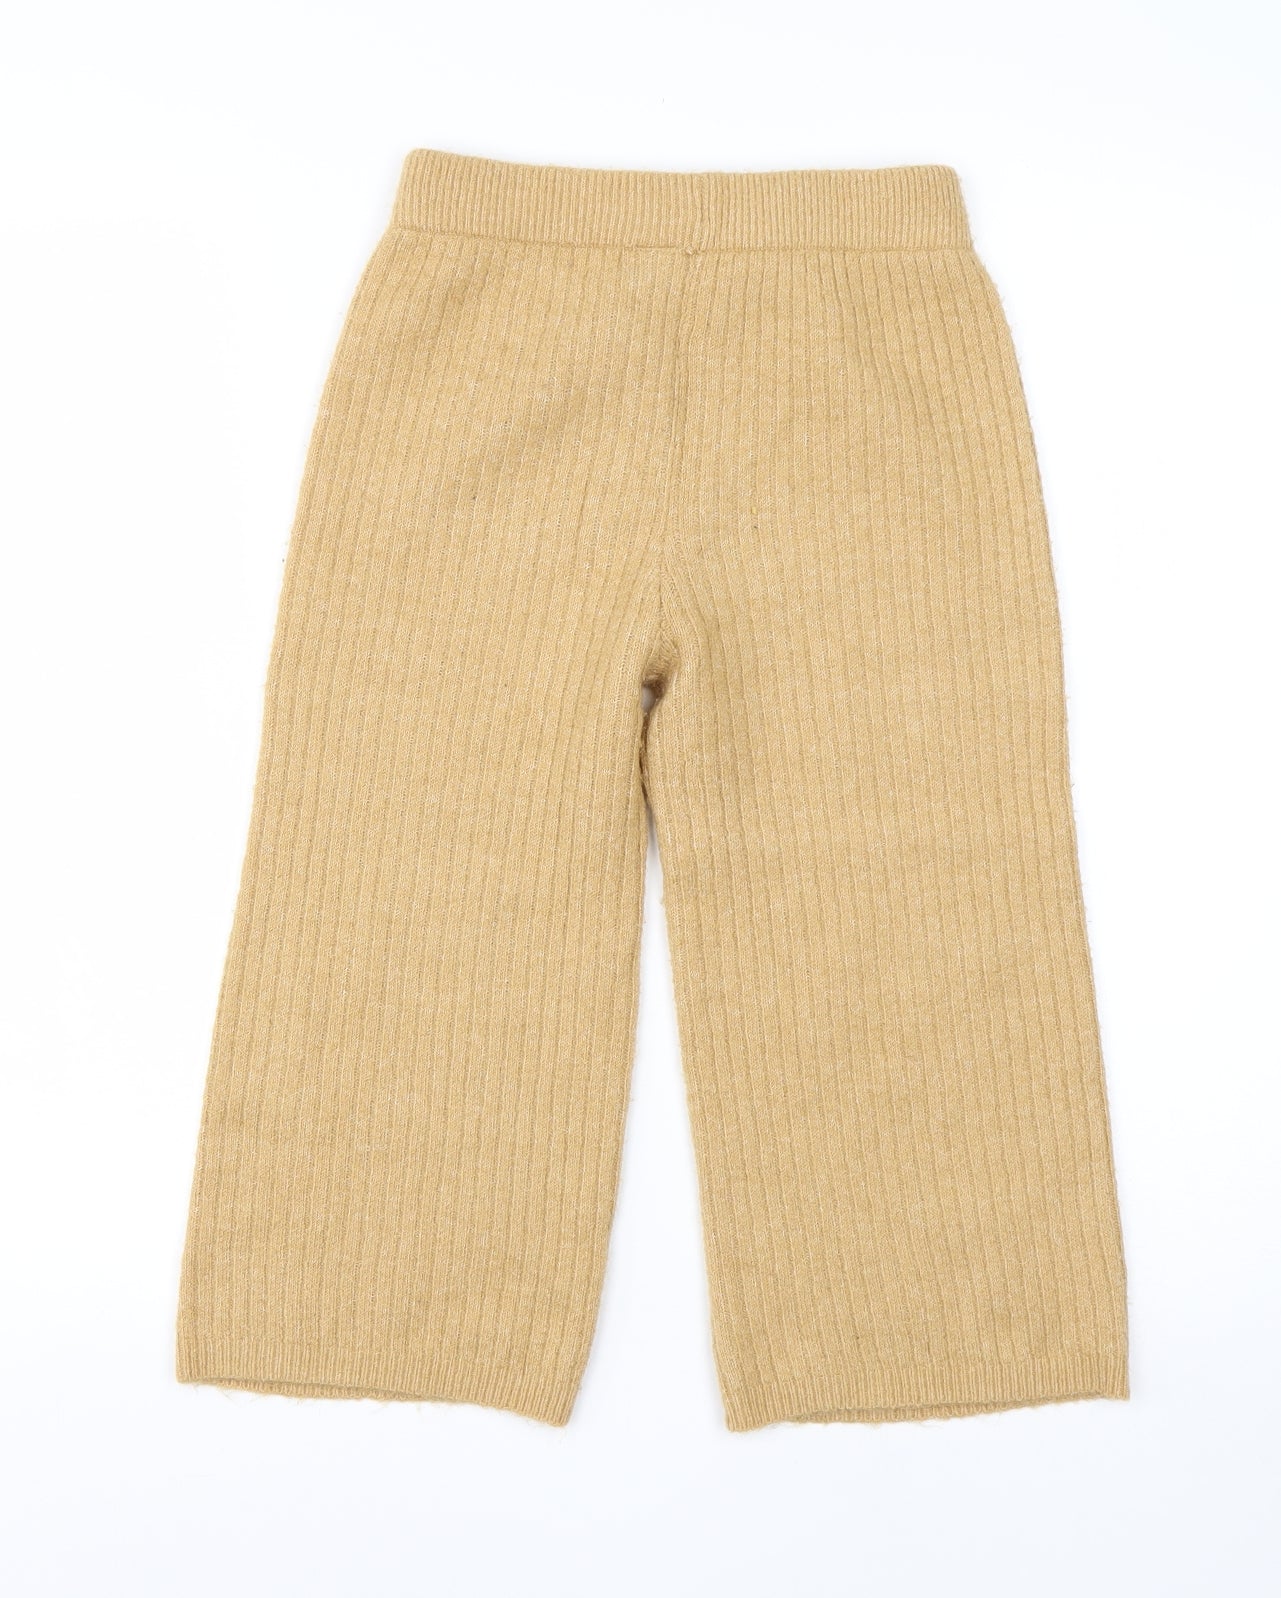 TU Girls Yellow  Acrylic  Trousers Size 9 Months  Regular